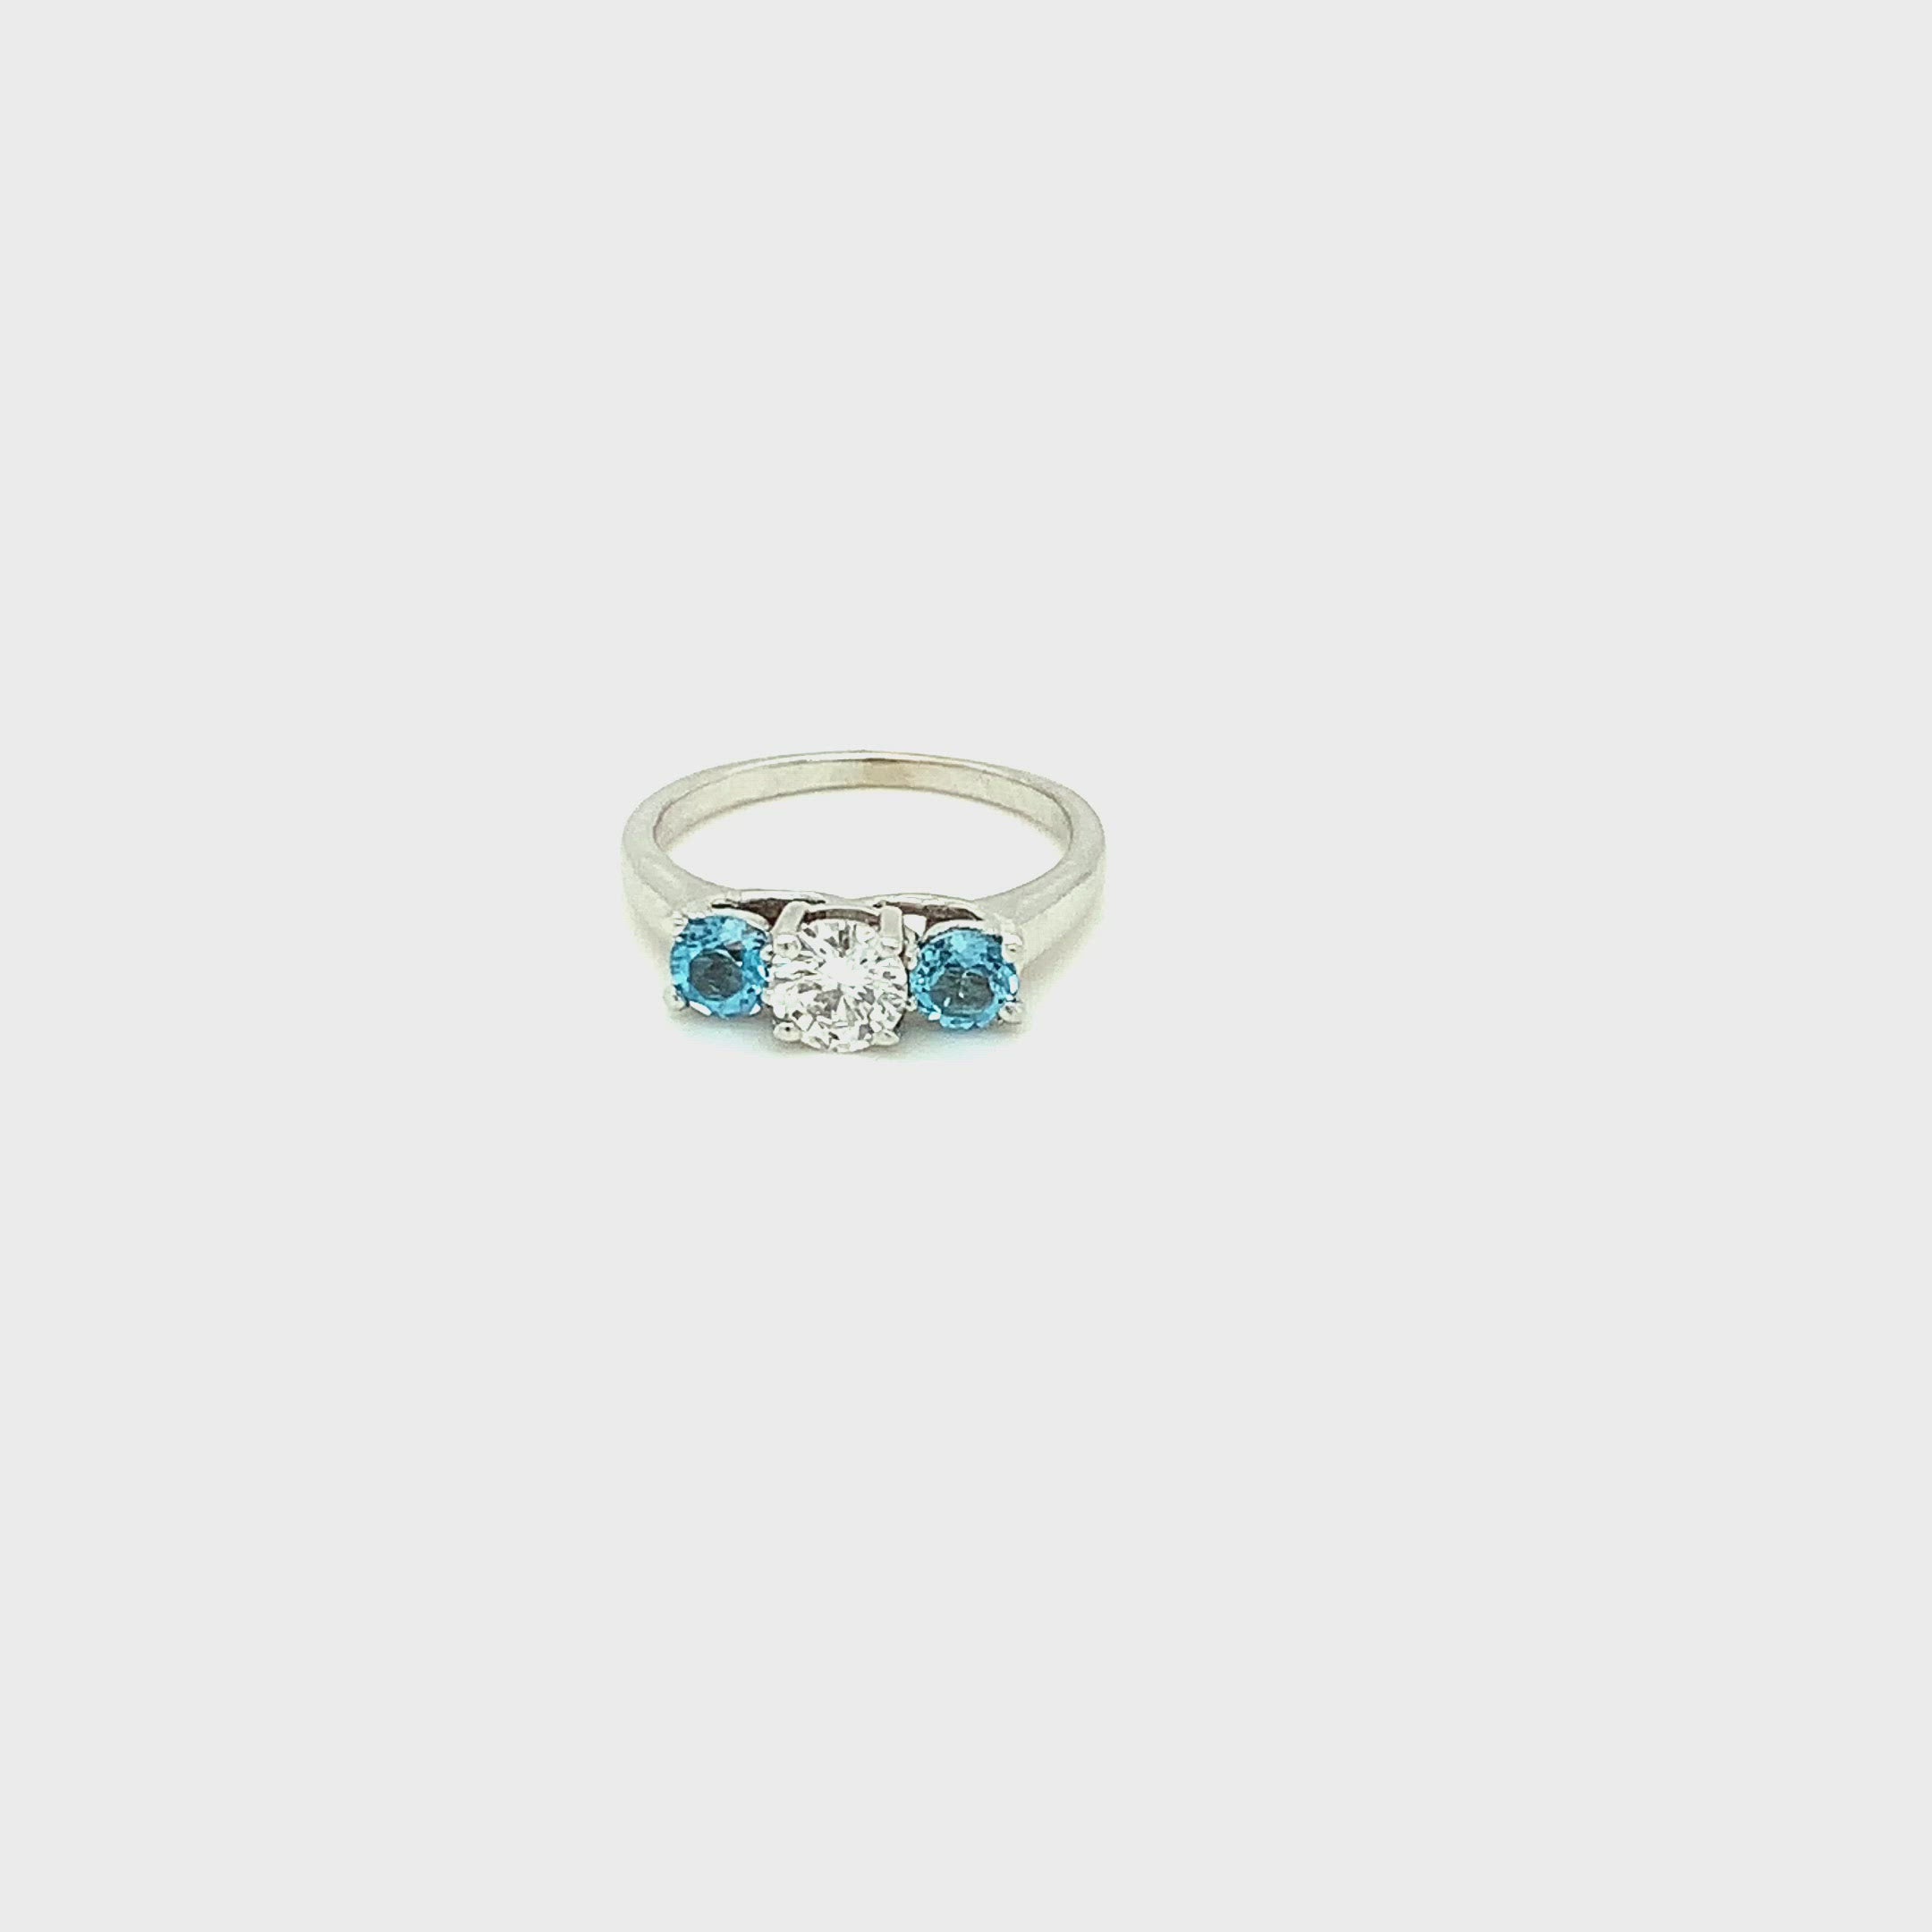 Natural Brazilian Paraiba Tourmaline & Diamond Ring 14K Solid White Gold Platinum 1.03tcw Gemstone Estate Jewelry Jewellery Three-Stone Ring